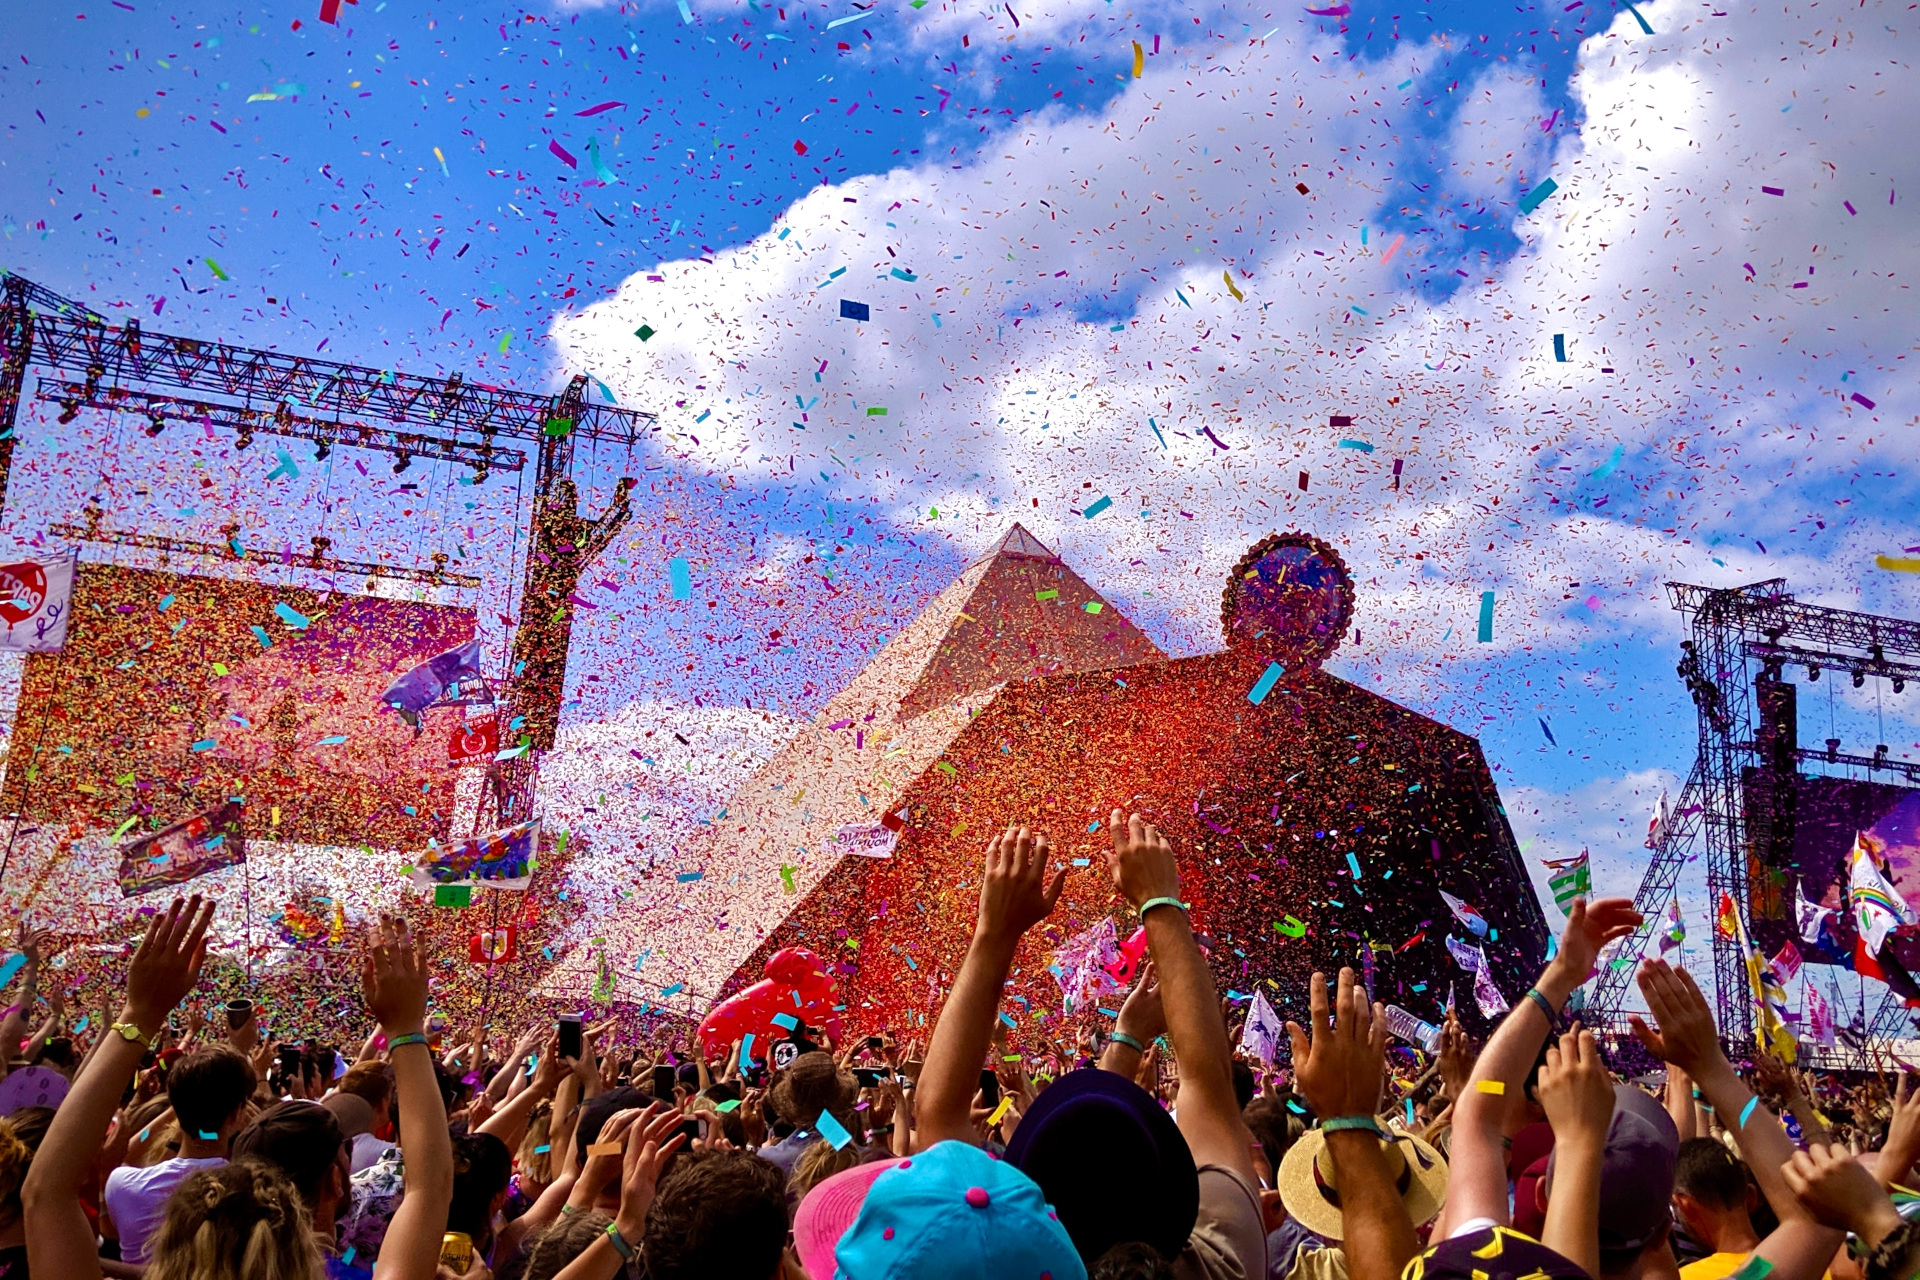 The Pyramid Stage at Glastonbury Festival 2019